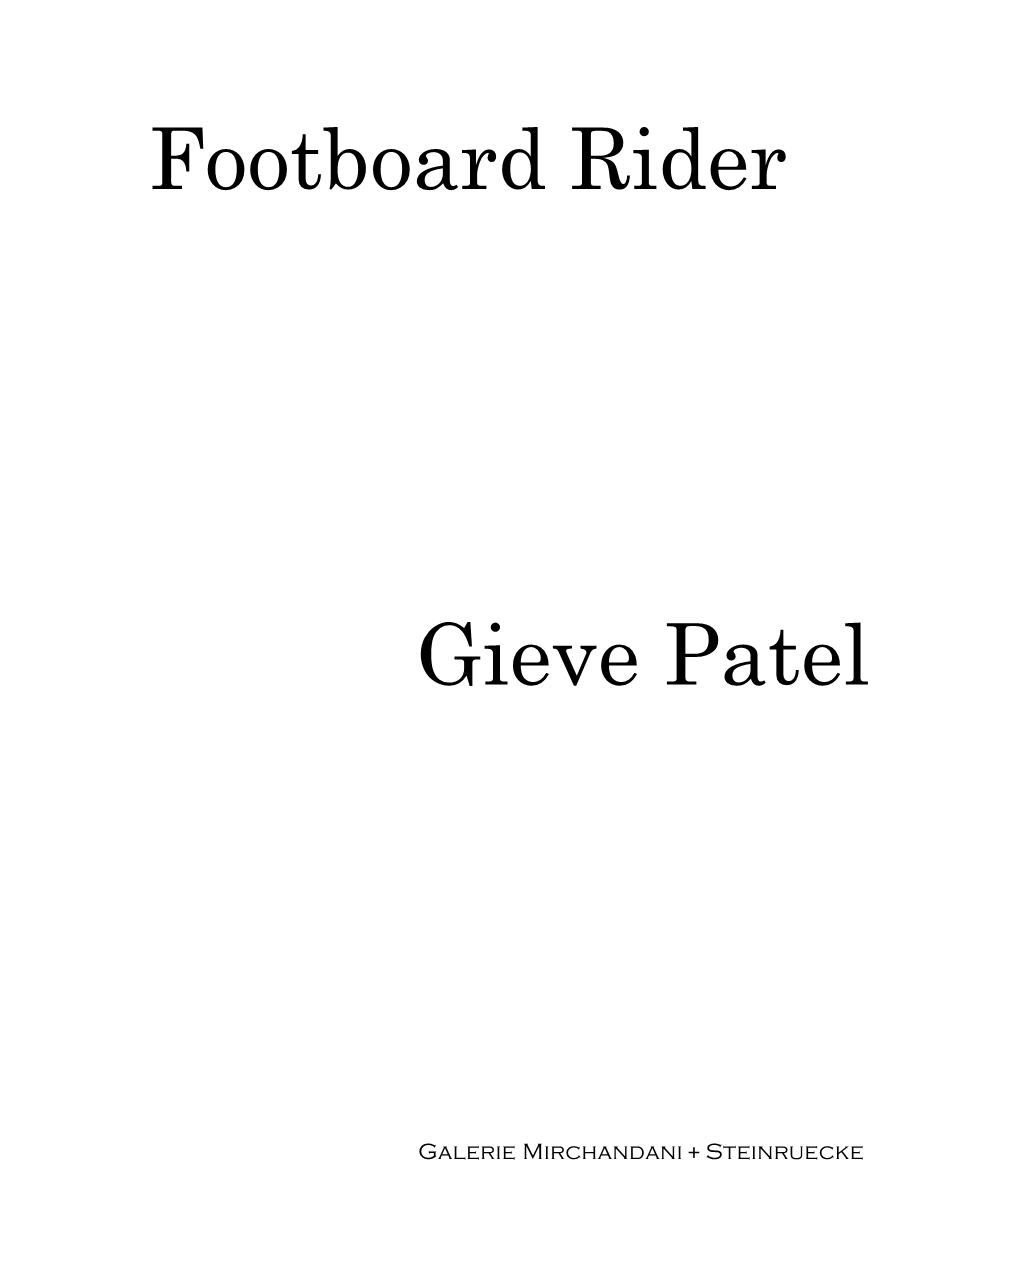 Footboard Rider Gieve Patel